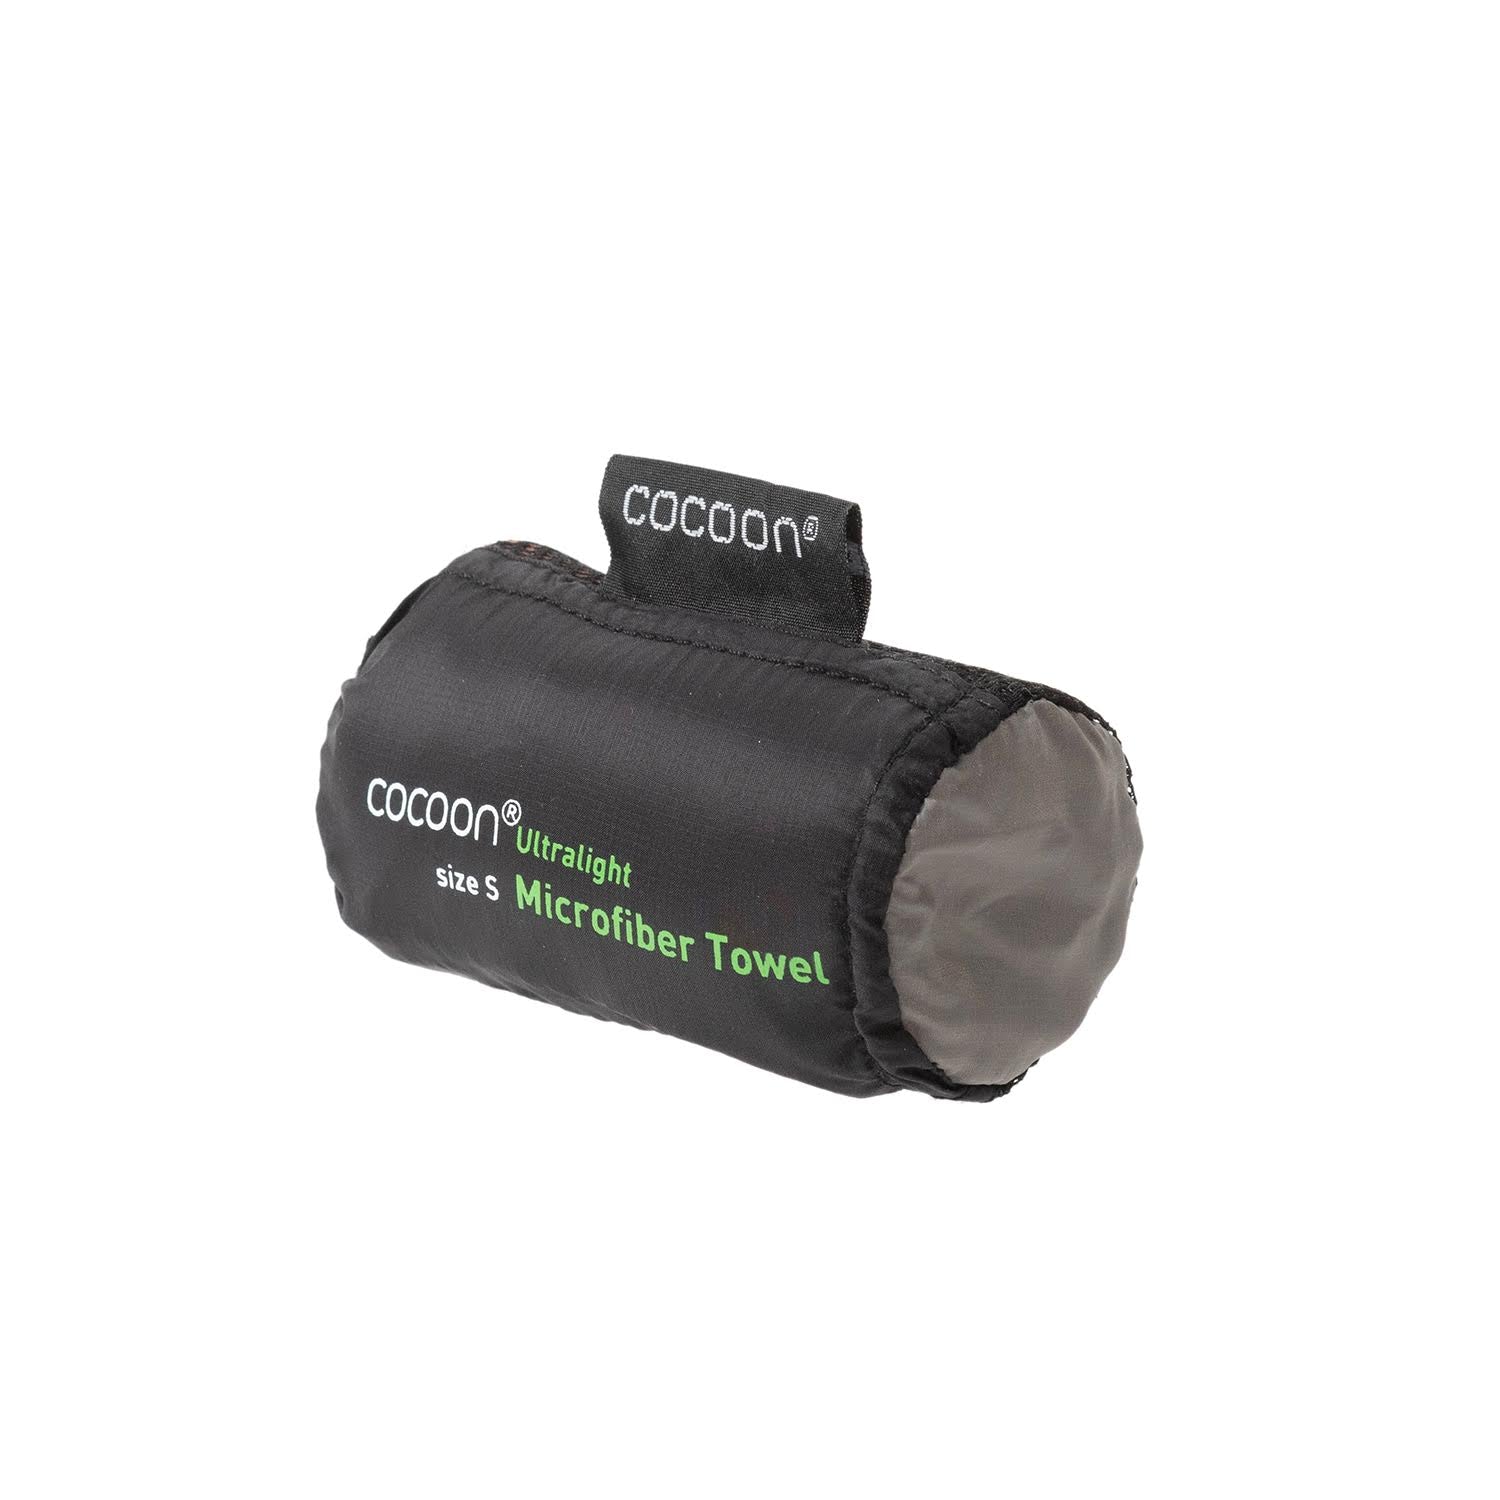 COCOON Ultralight Microfiber Towel